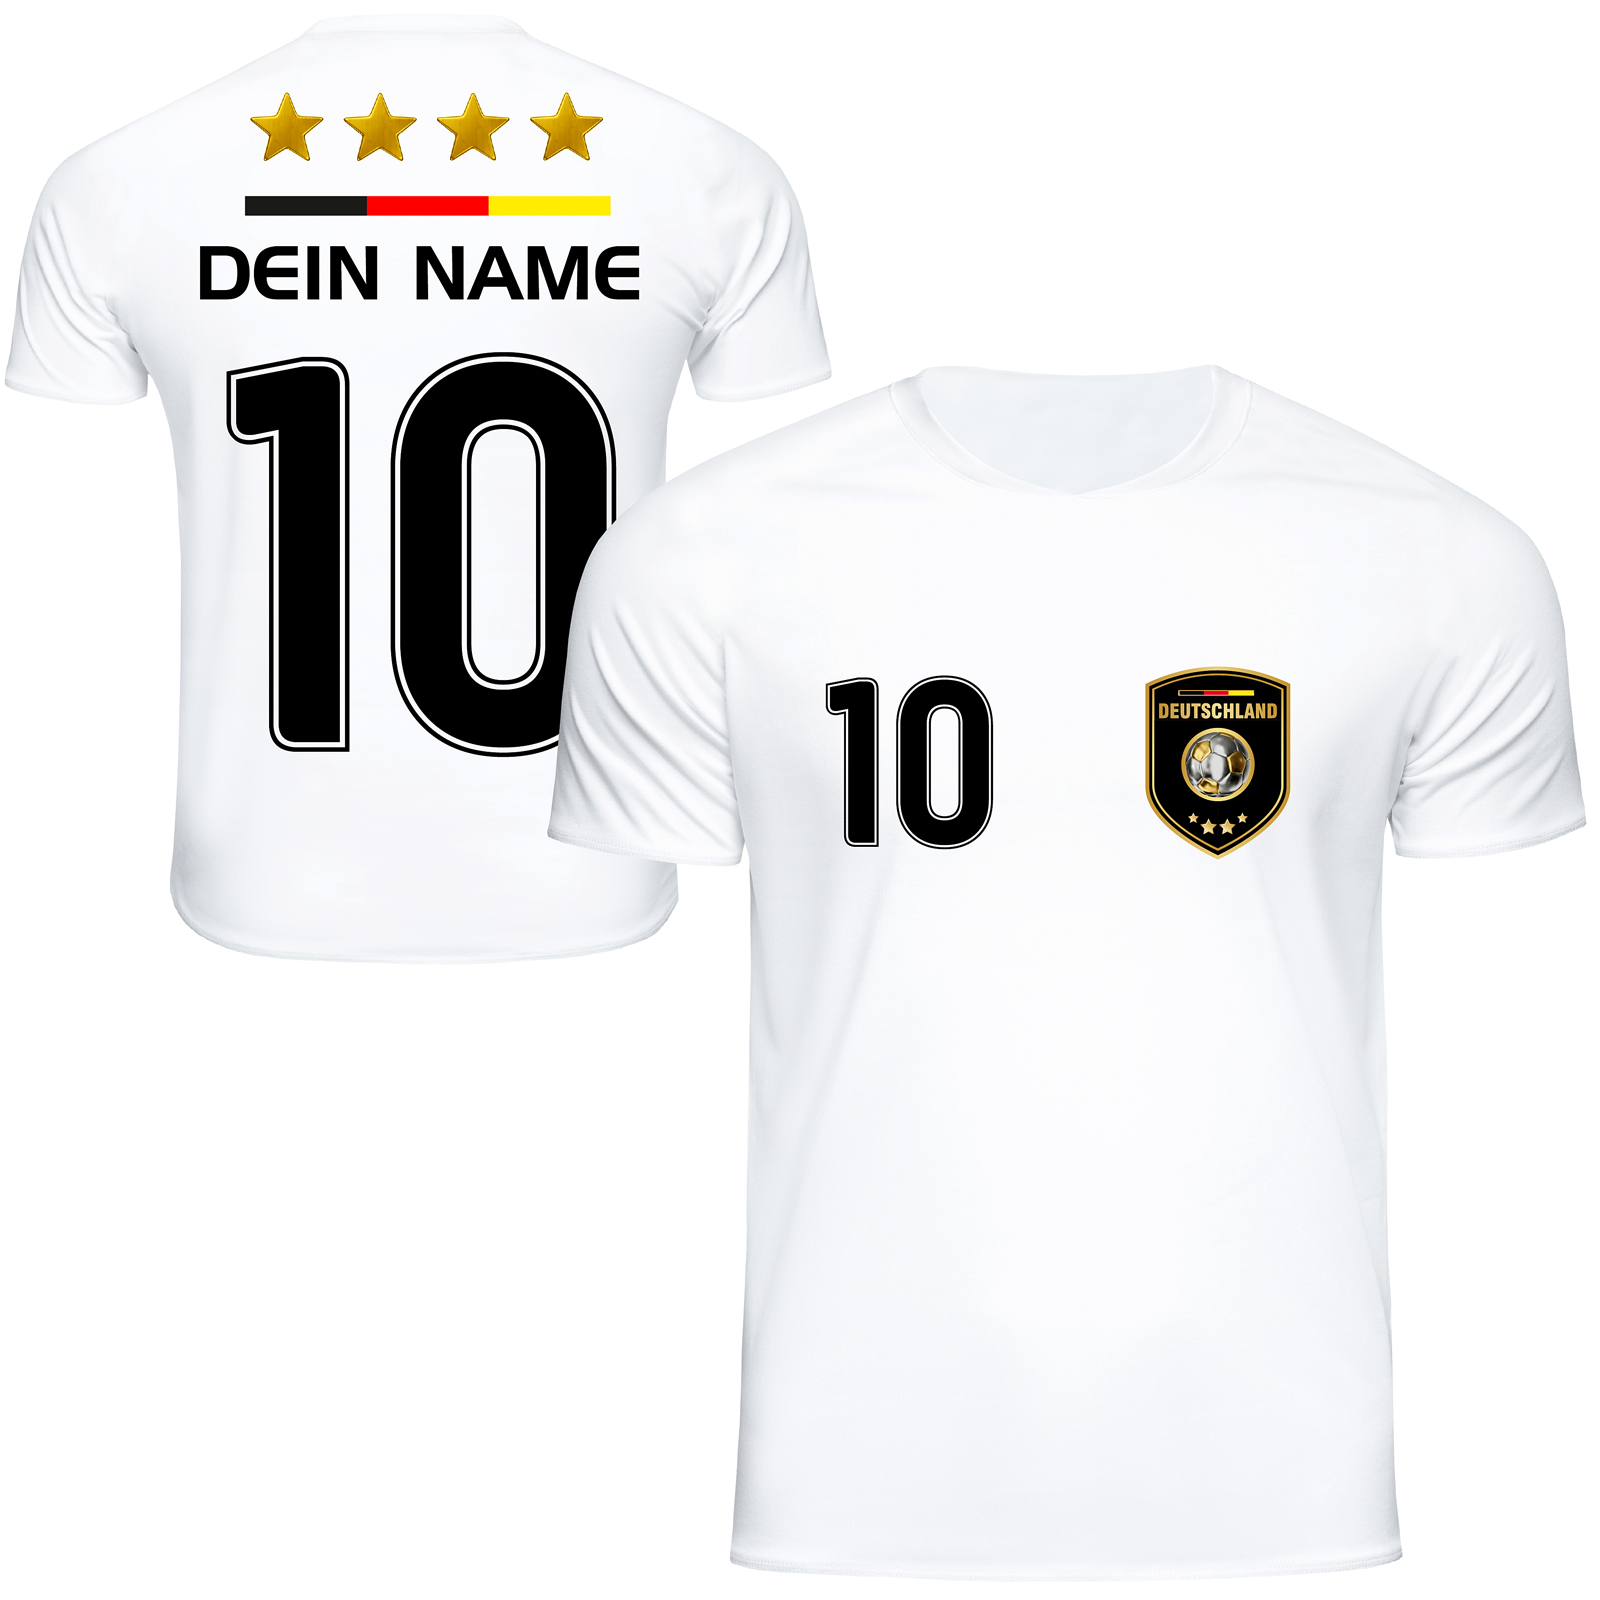 Deutschland Fußball Trikot Herren Damen T-Shirt wm Germany Jersey Shirt Sternen 